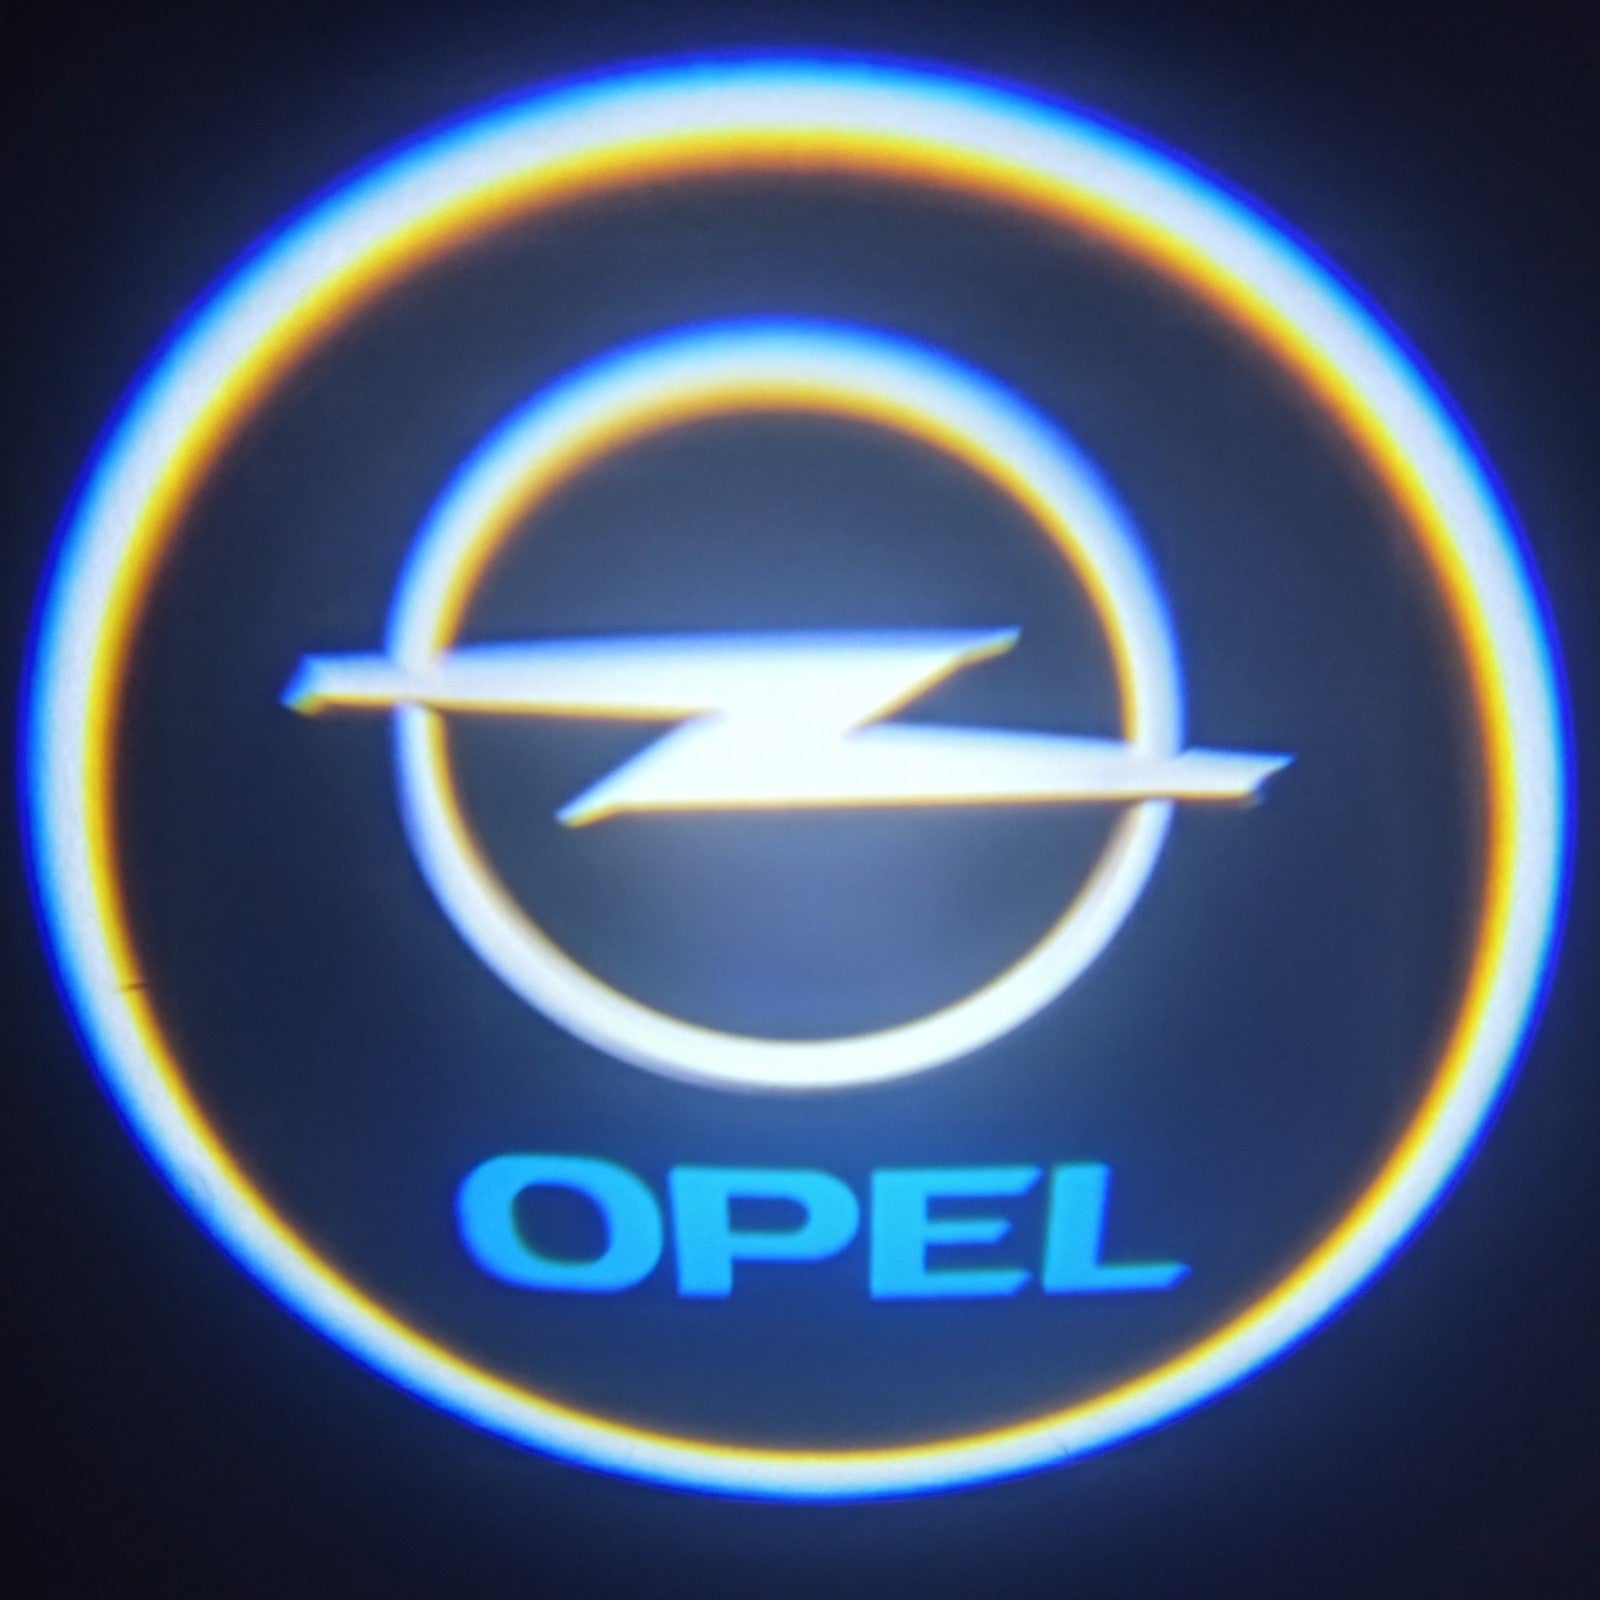 Luzes Cortesia com Logotipo marca Opel